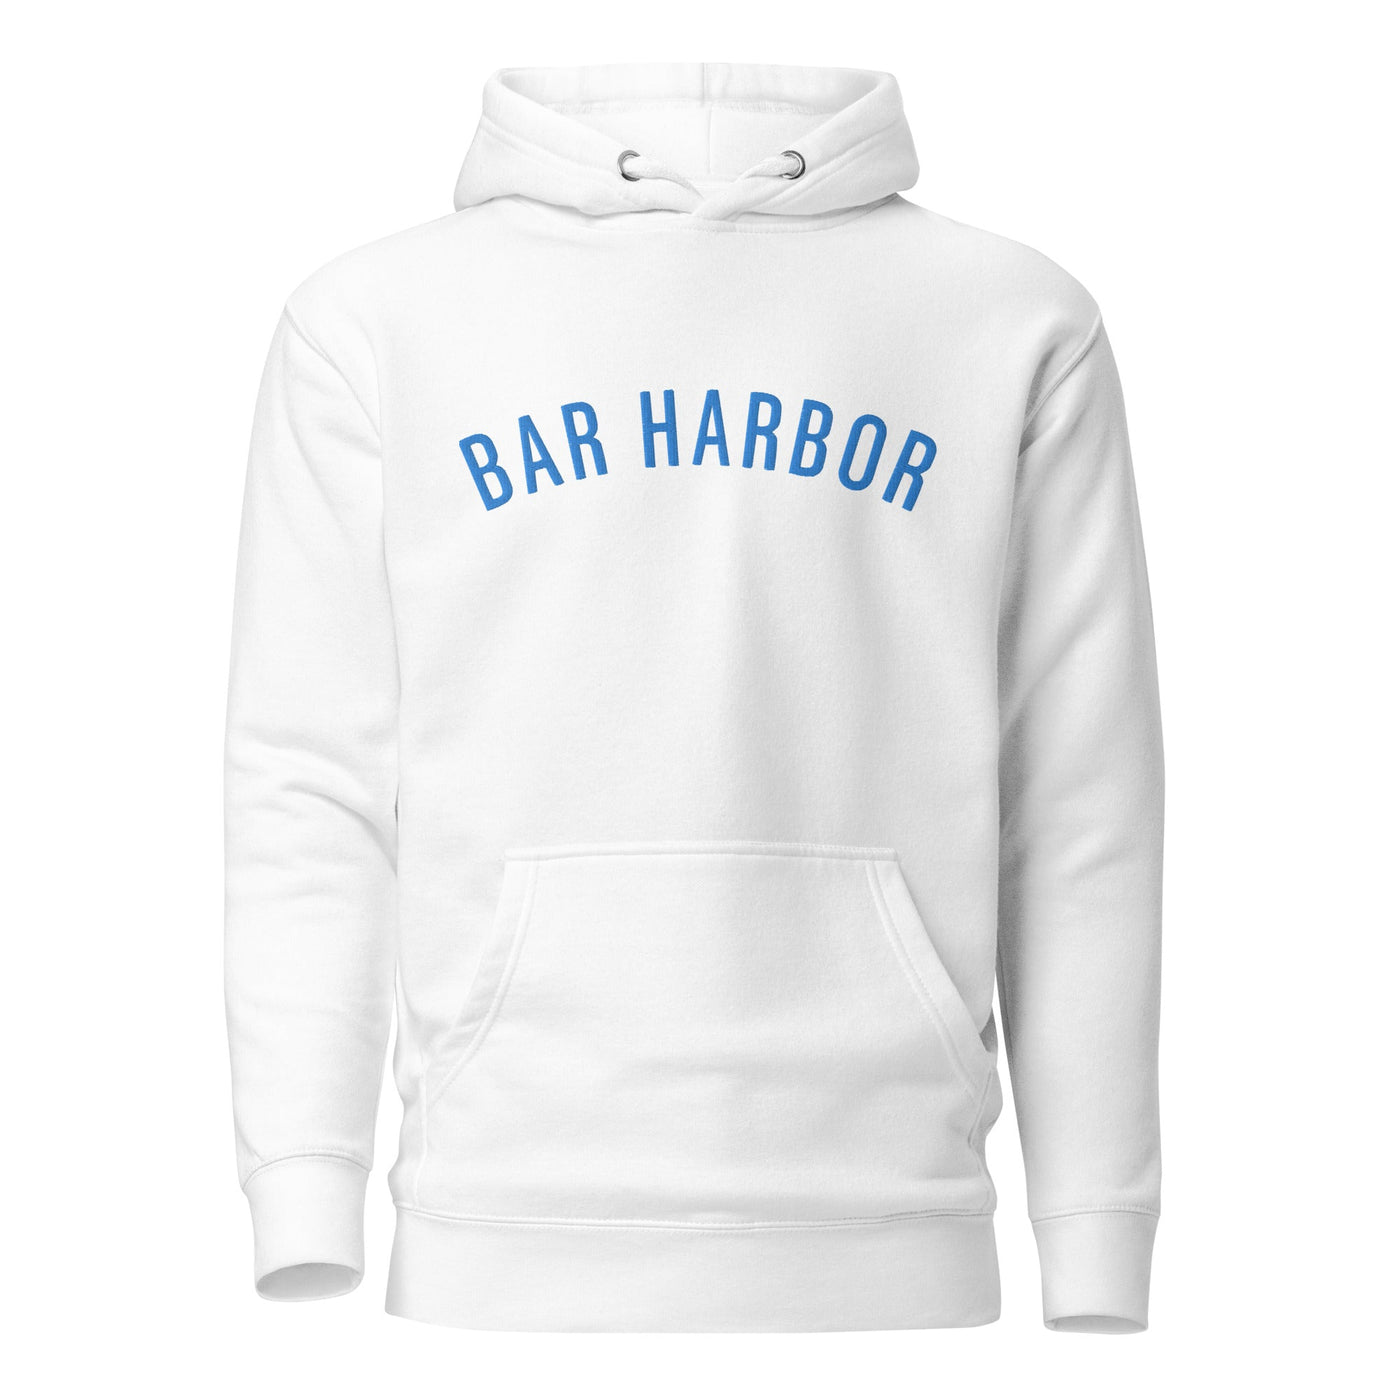 Embroidered Bar Harbor Sweatshirt - Premium Unisex Hooded Sweatshirt - BH Maine-207 Threads